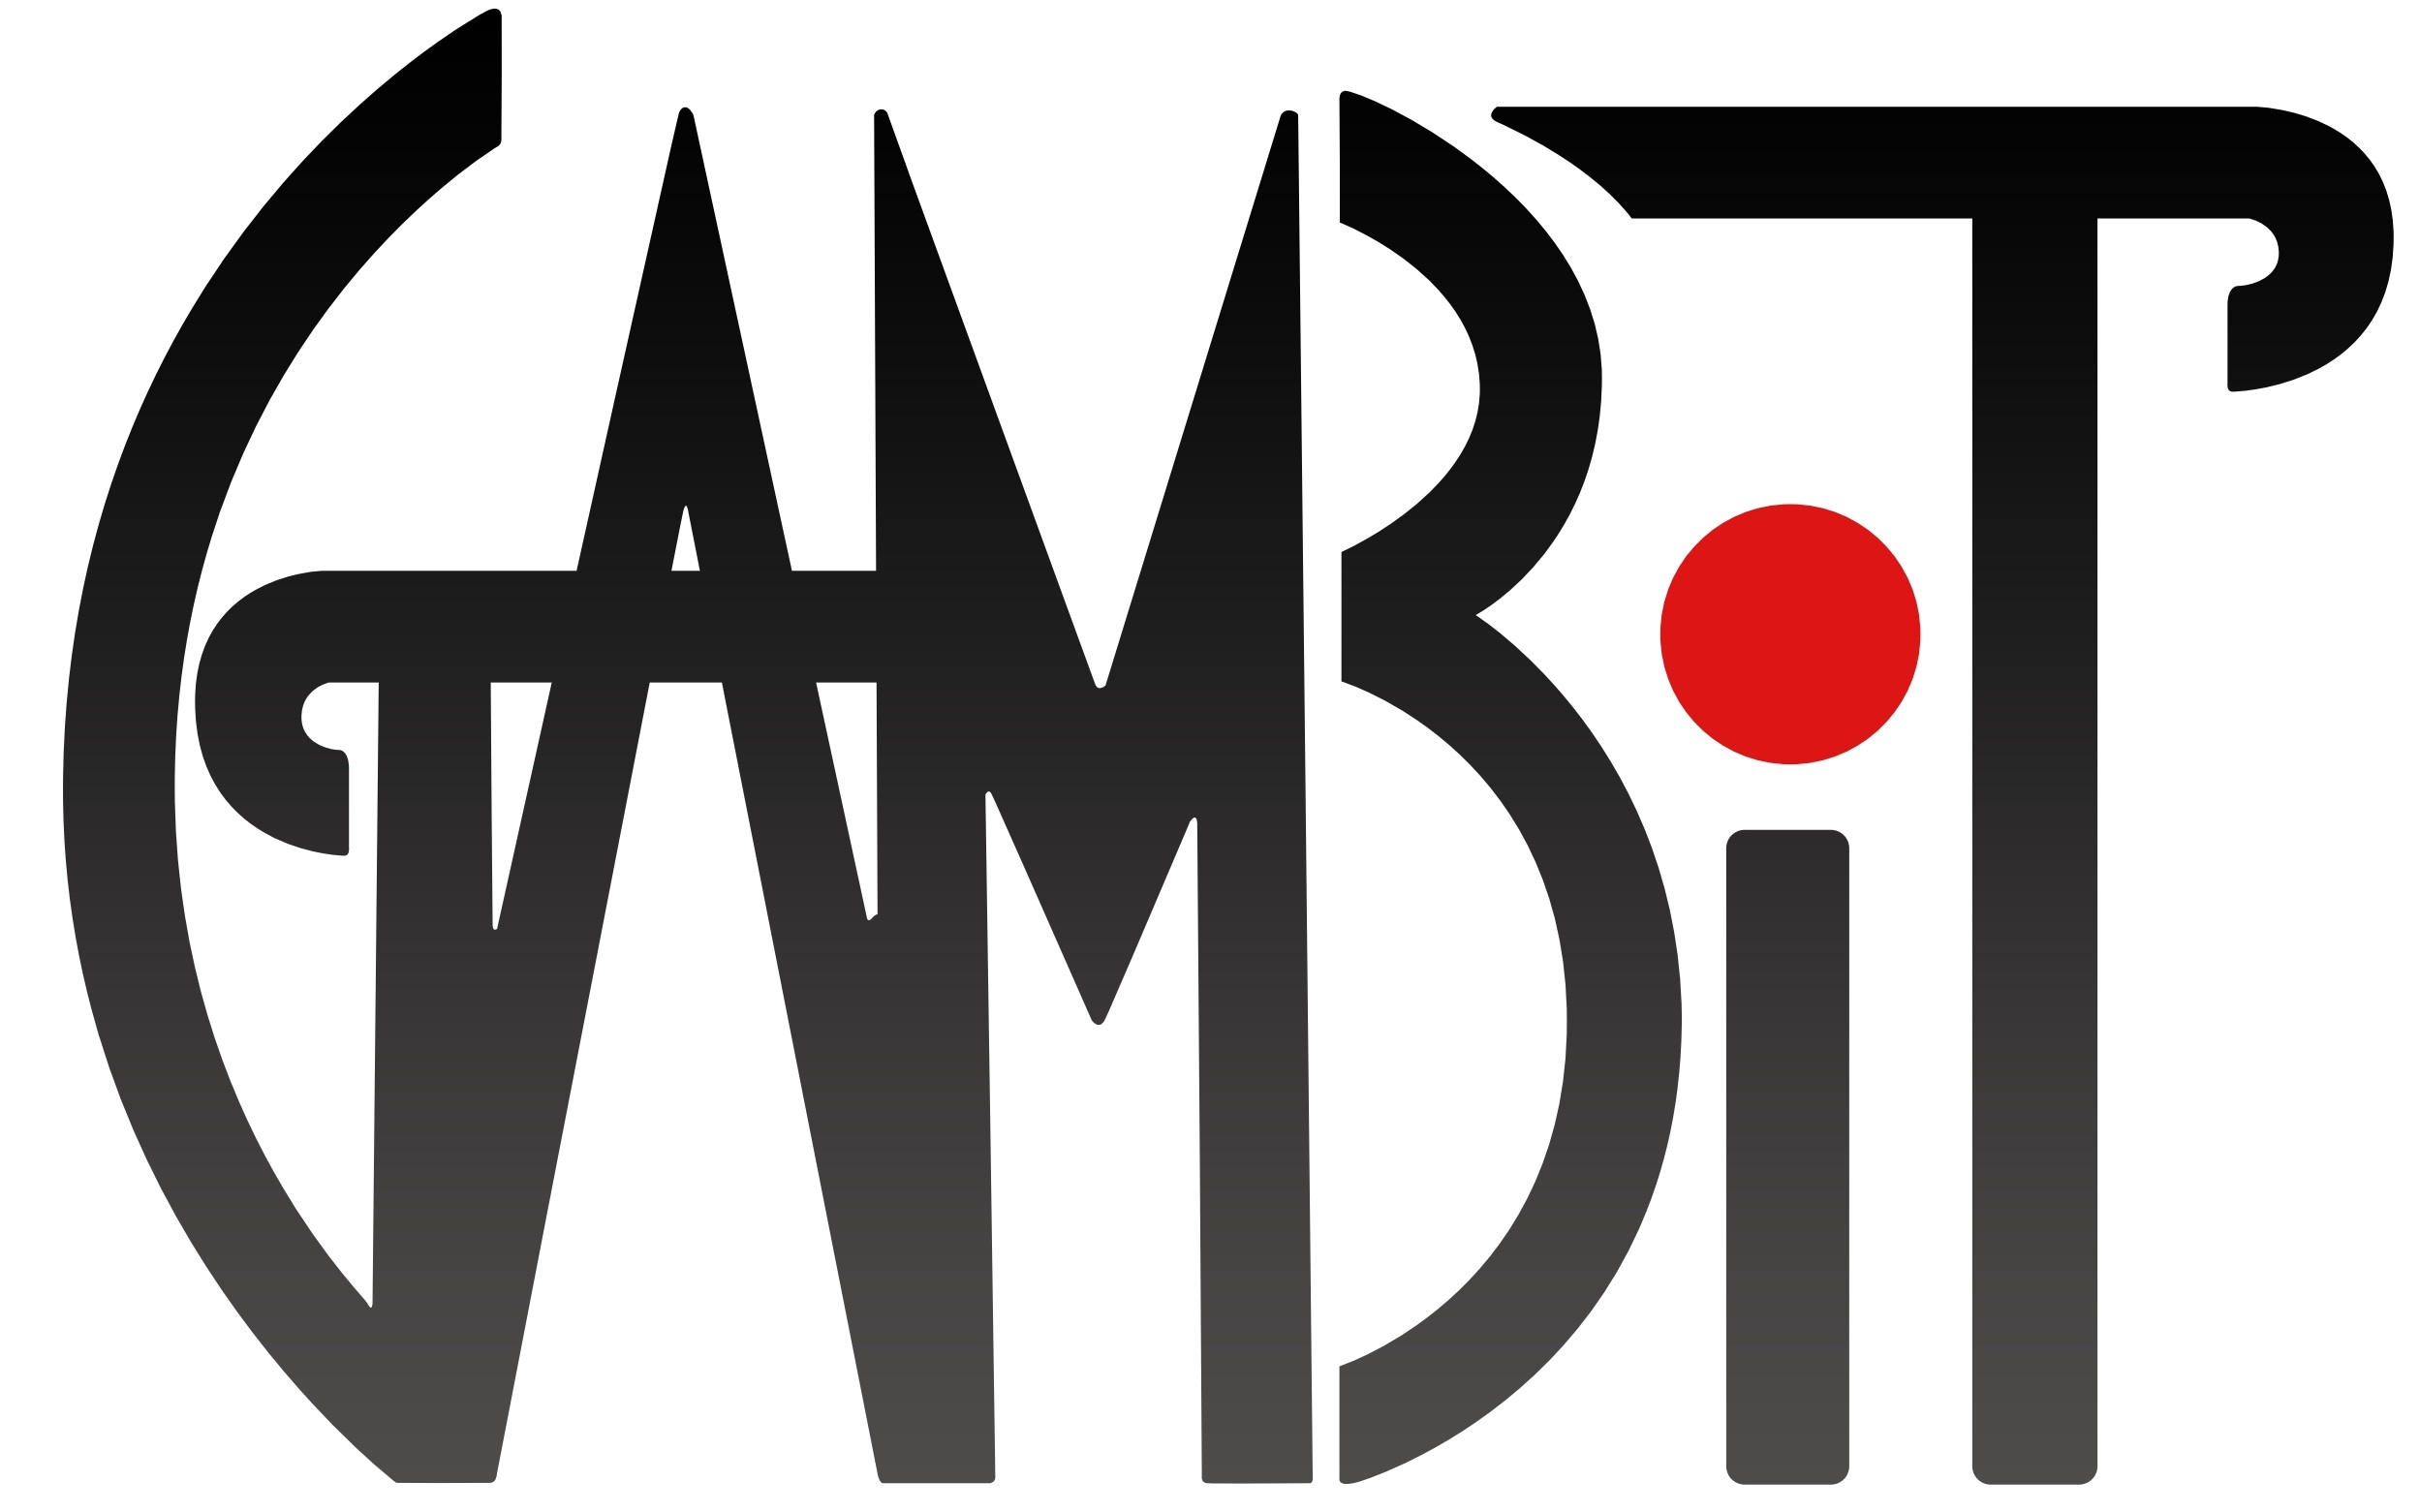 GAMBIT Logo.jpg 1764feb717f78e427c697a4754308f89